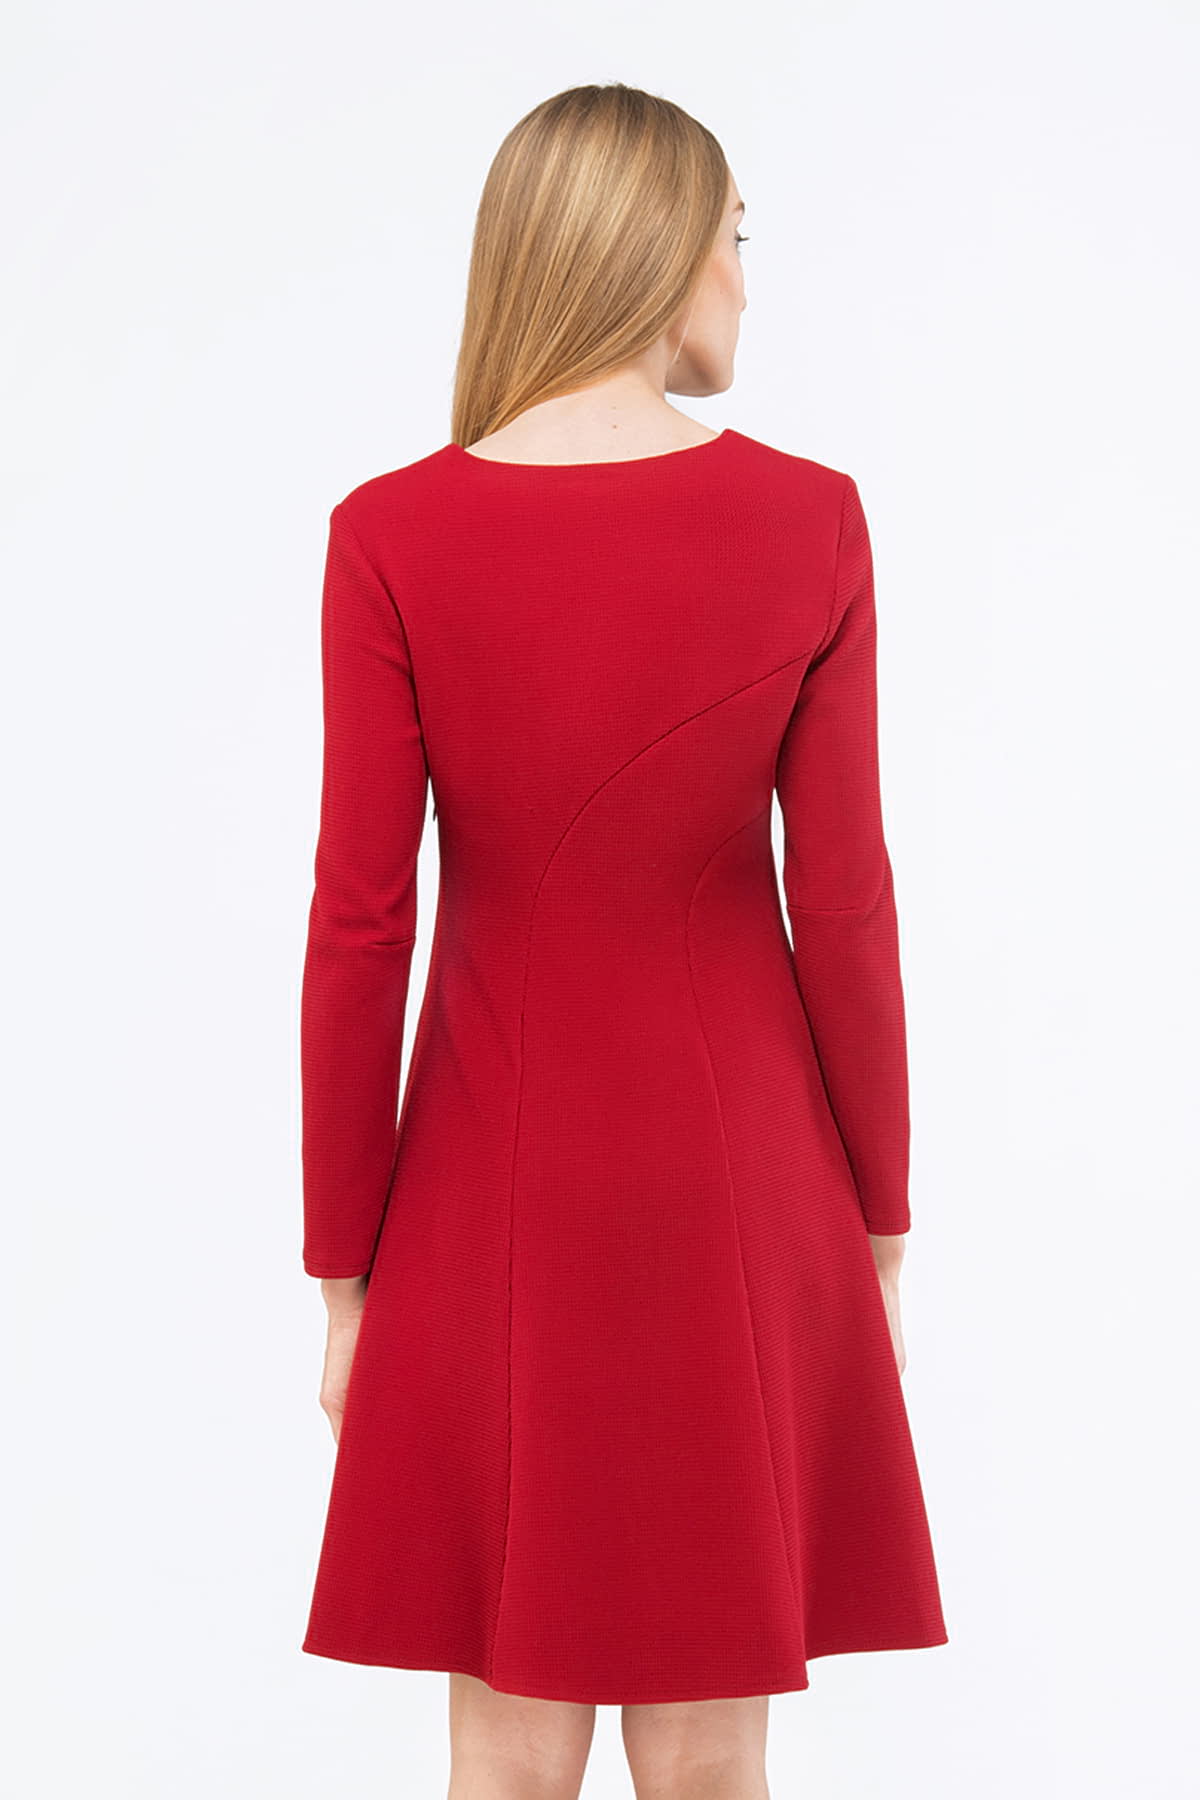 Red A-line dress , photo 2